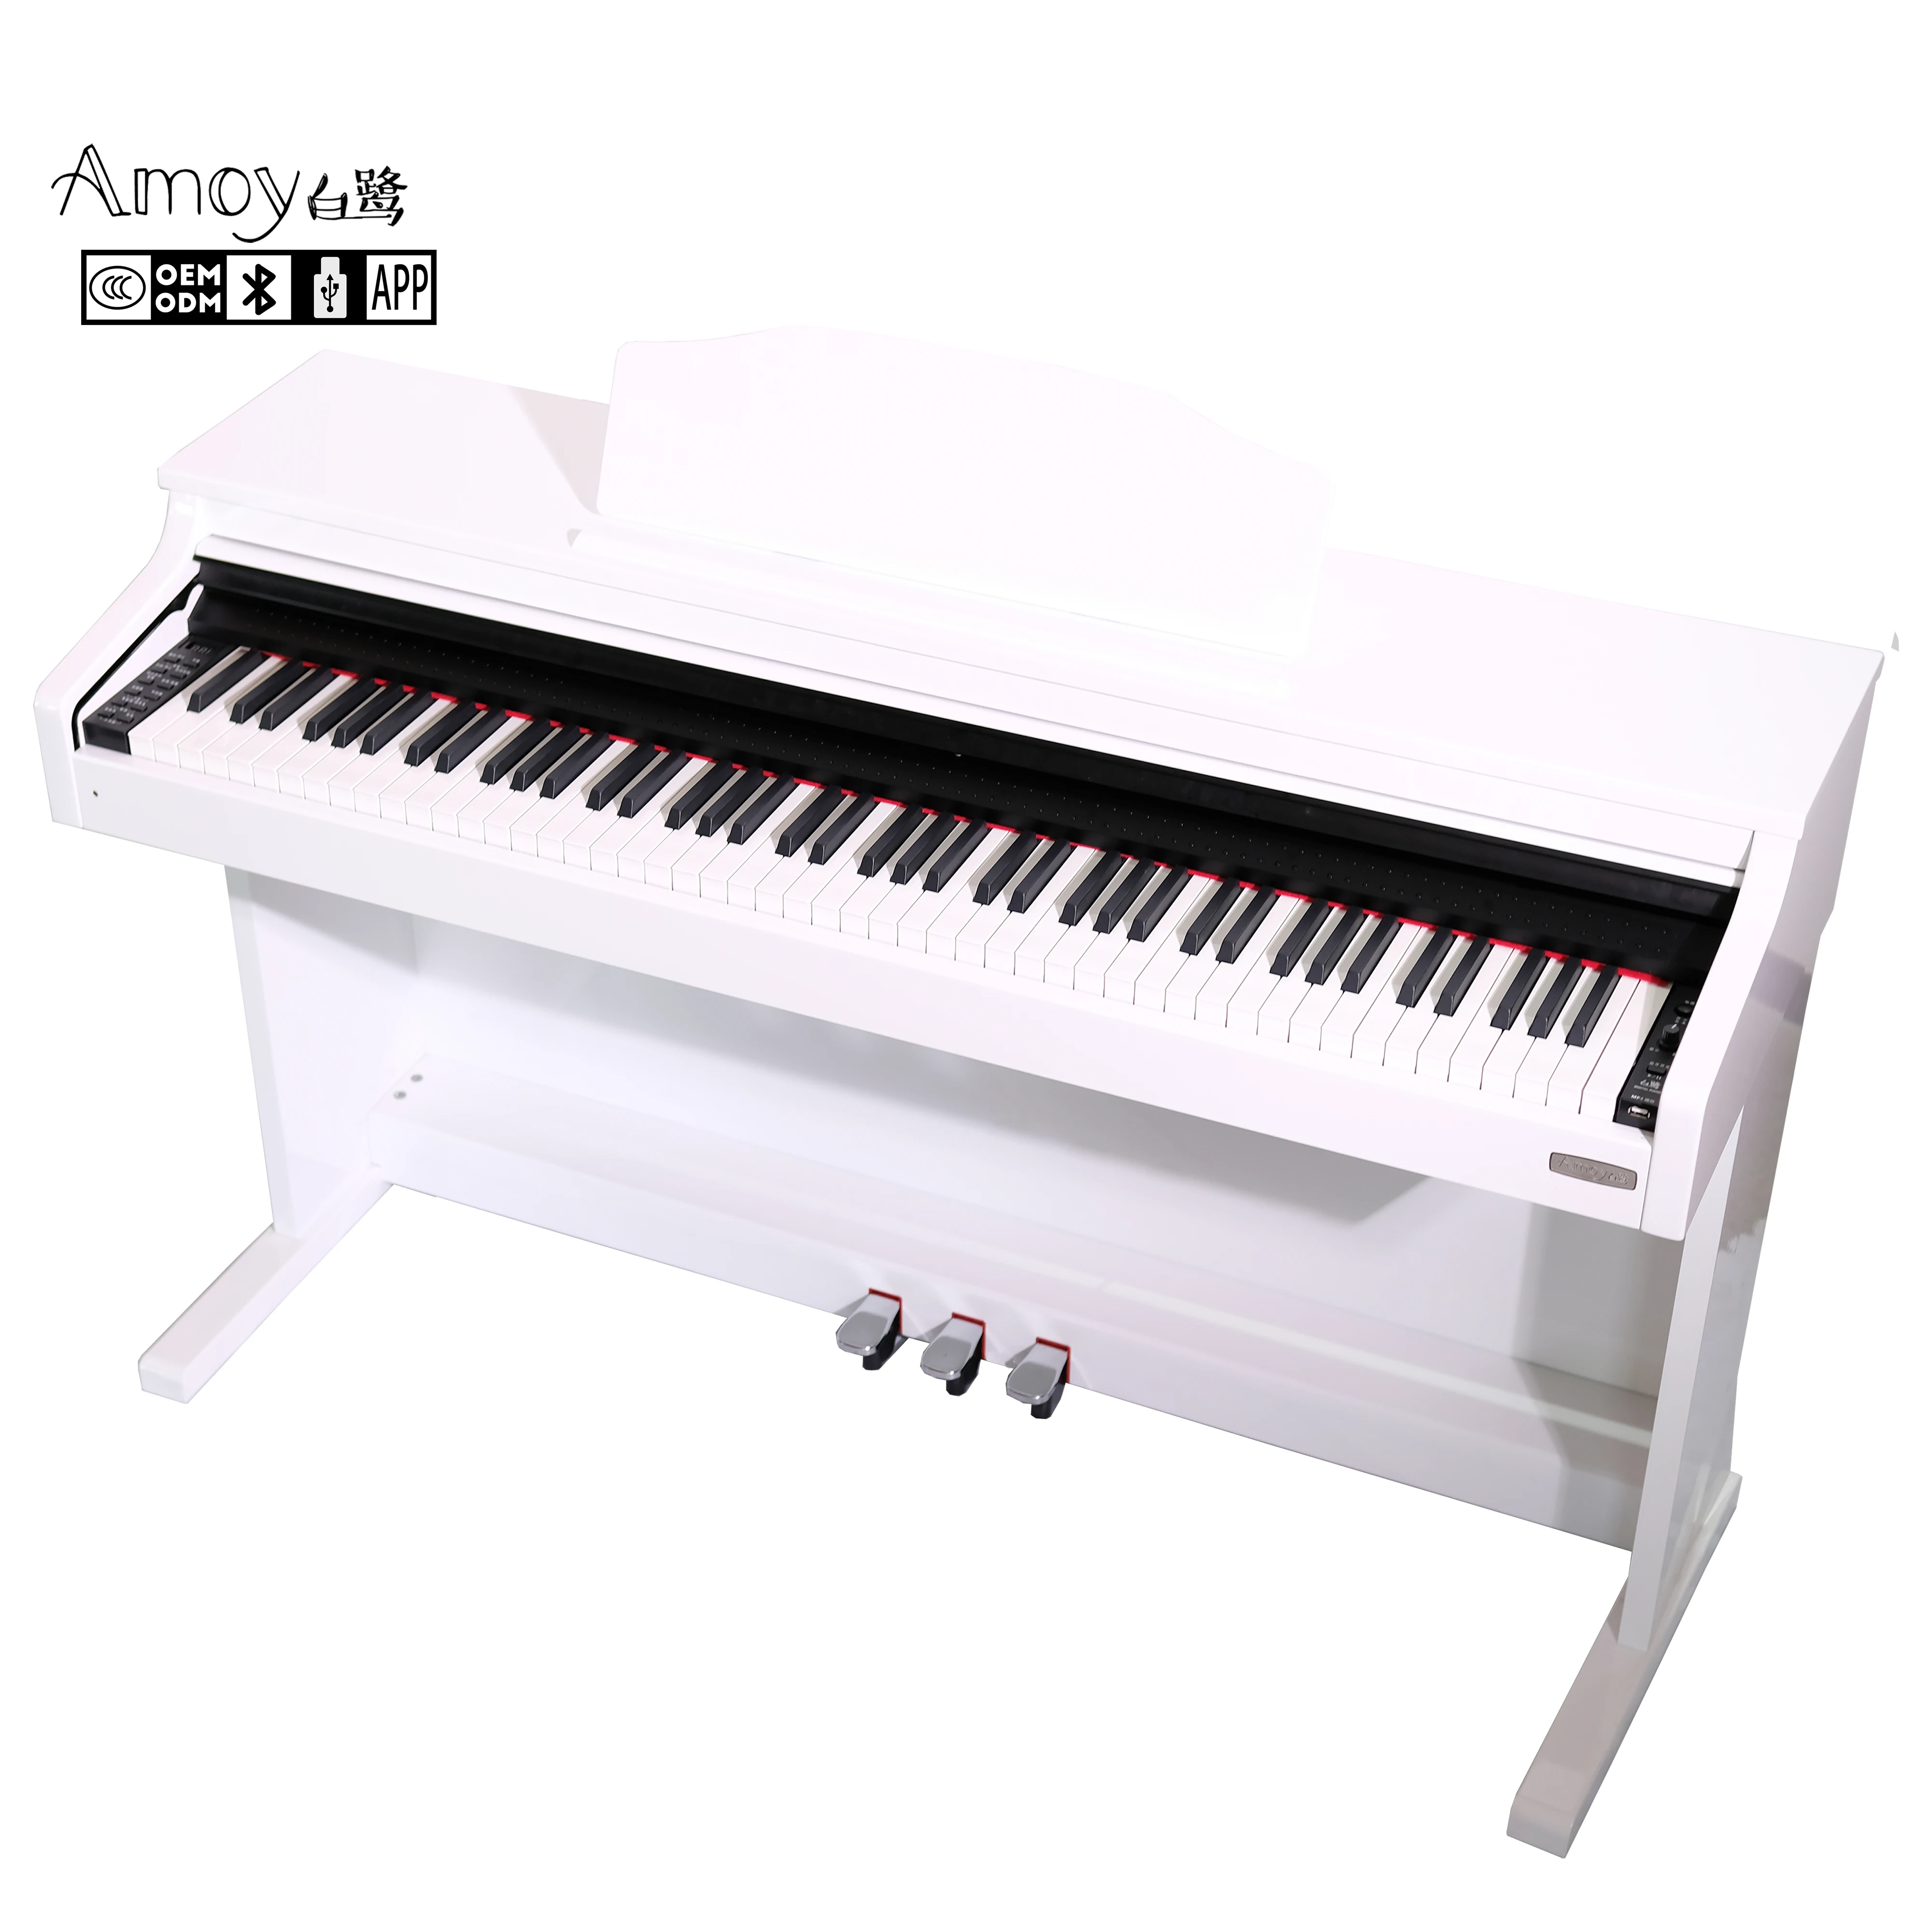 

88 Key Keyboard Midi Pianoforte 88 Keys Music Electronic Piano Grand Electric Klavier 88-Keys Upright Digital Piano, Black & oem